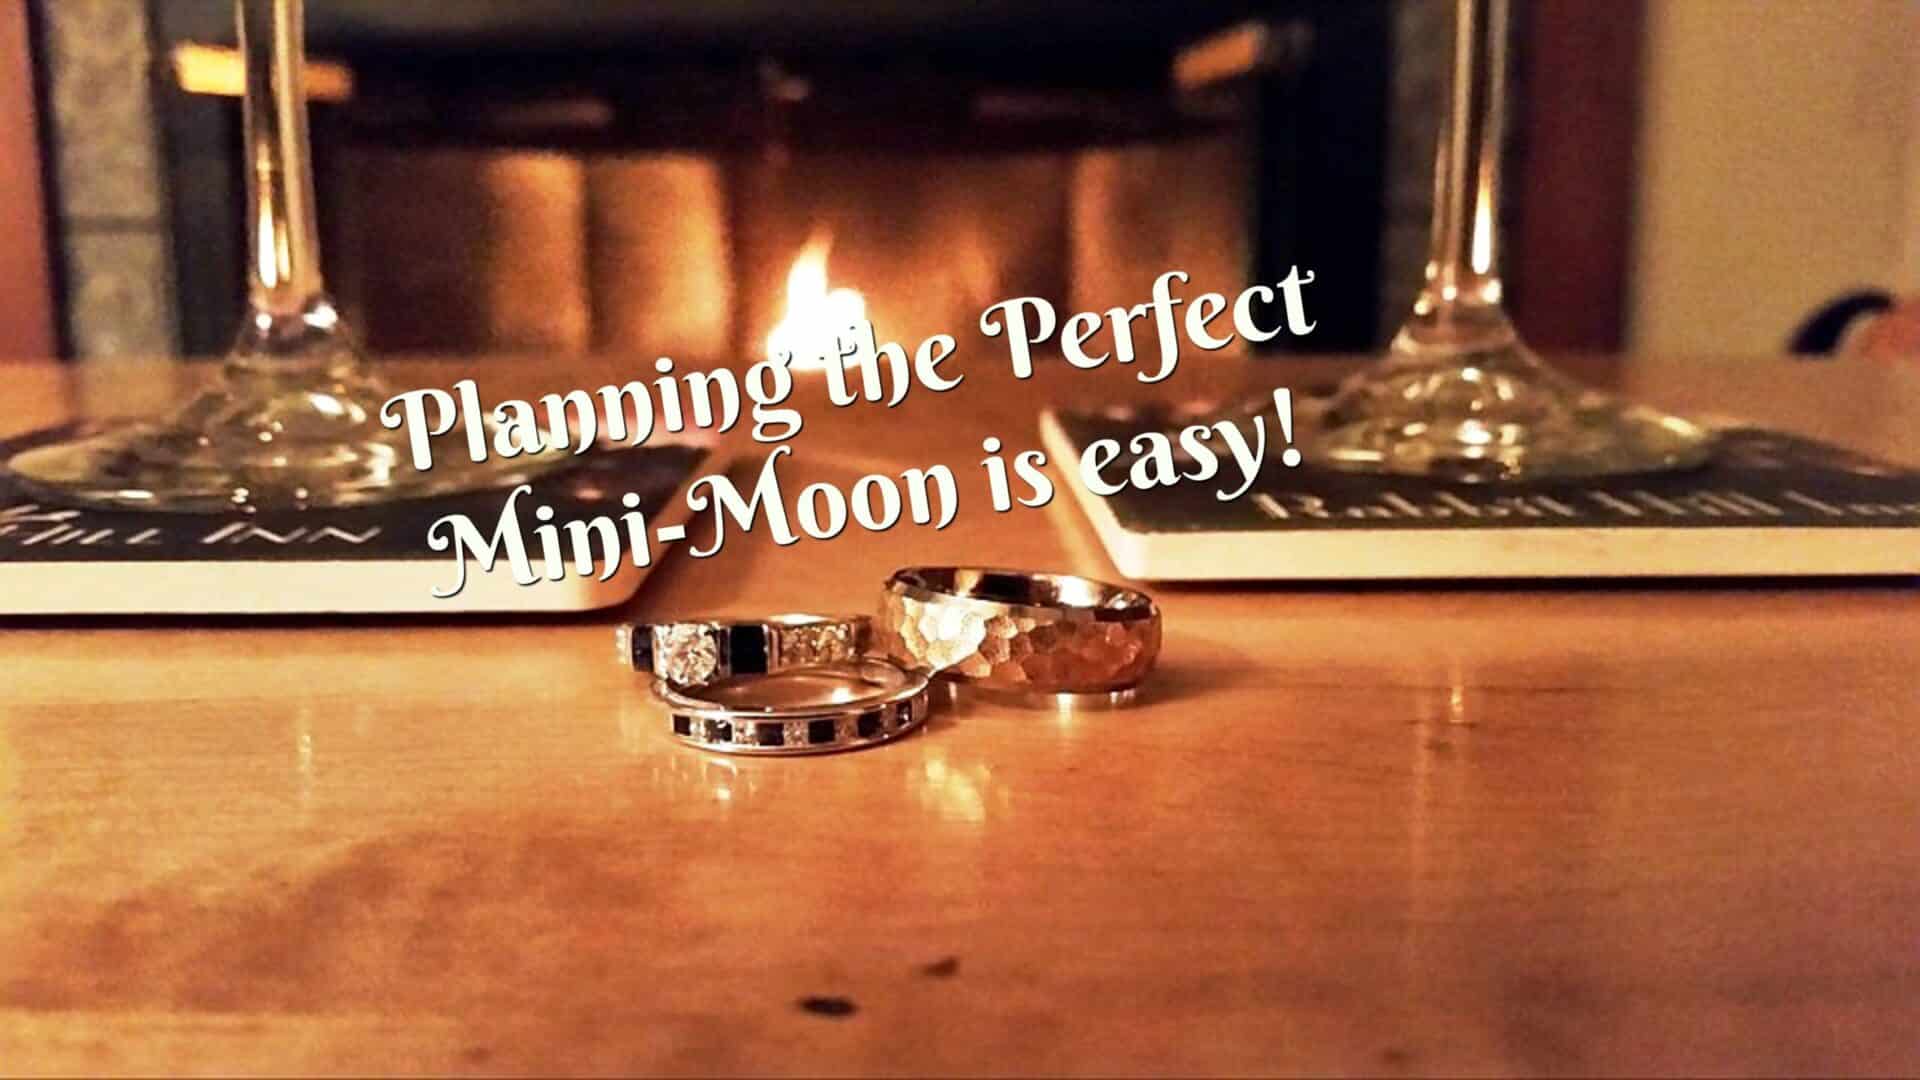 Rabbit Hill Inn mini moon honeymoon packages|Mini moon packages and deals|Romantic getaway honeymoon packages||Make a reservation at Rabbit Hill Inn